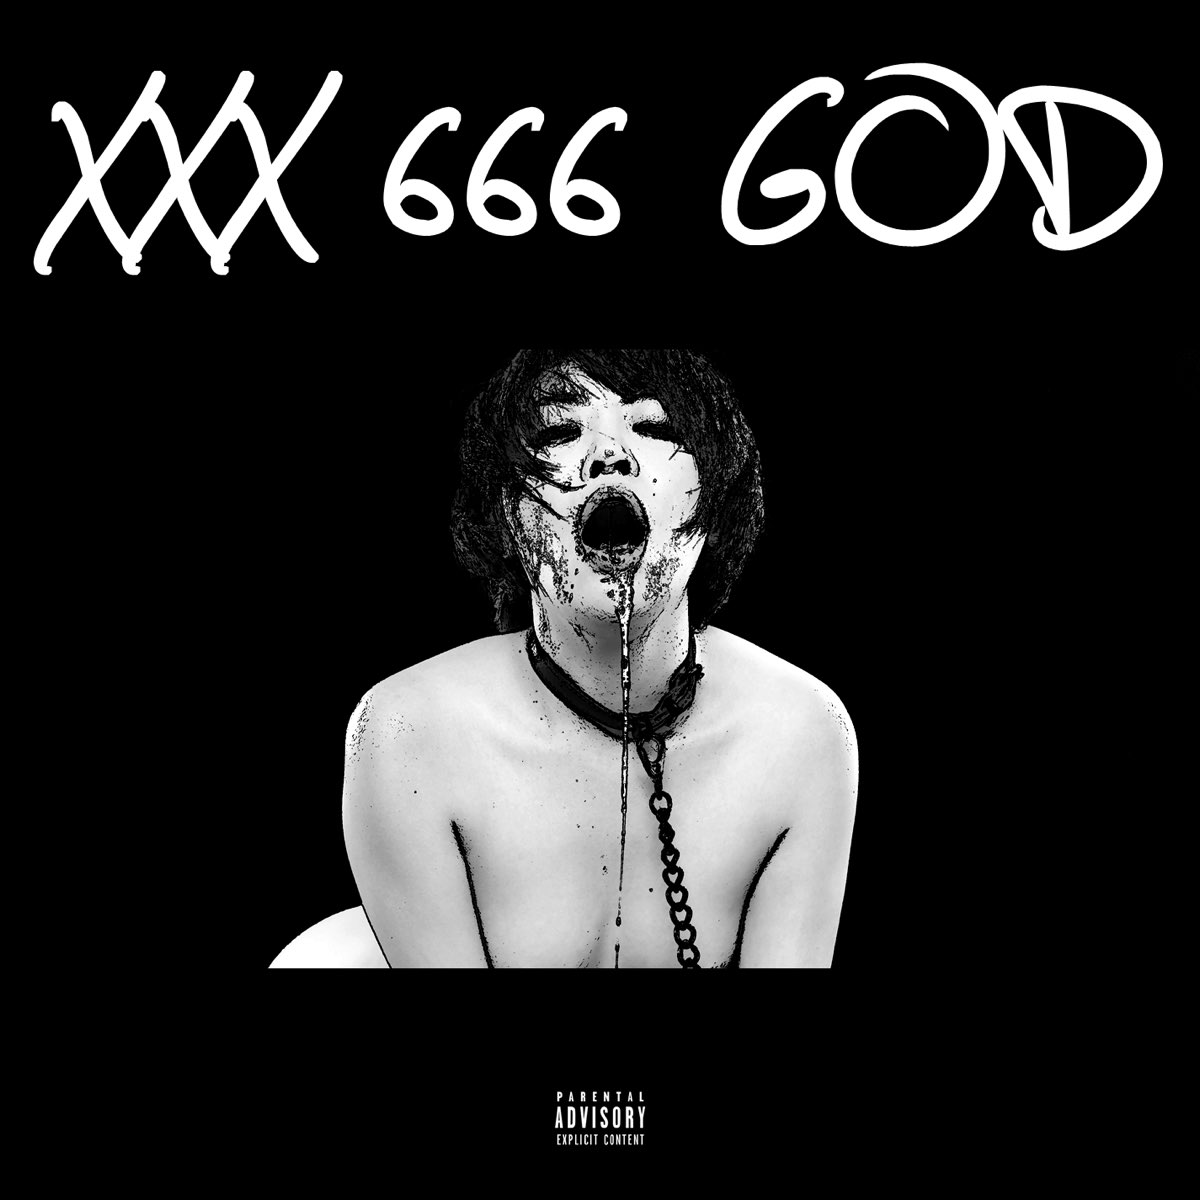 Xxx666 - Asian Porn EP de XXX 666 GOD en Apple Music